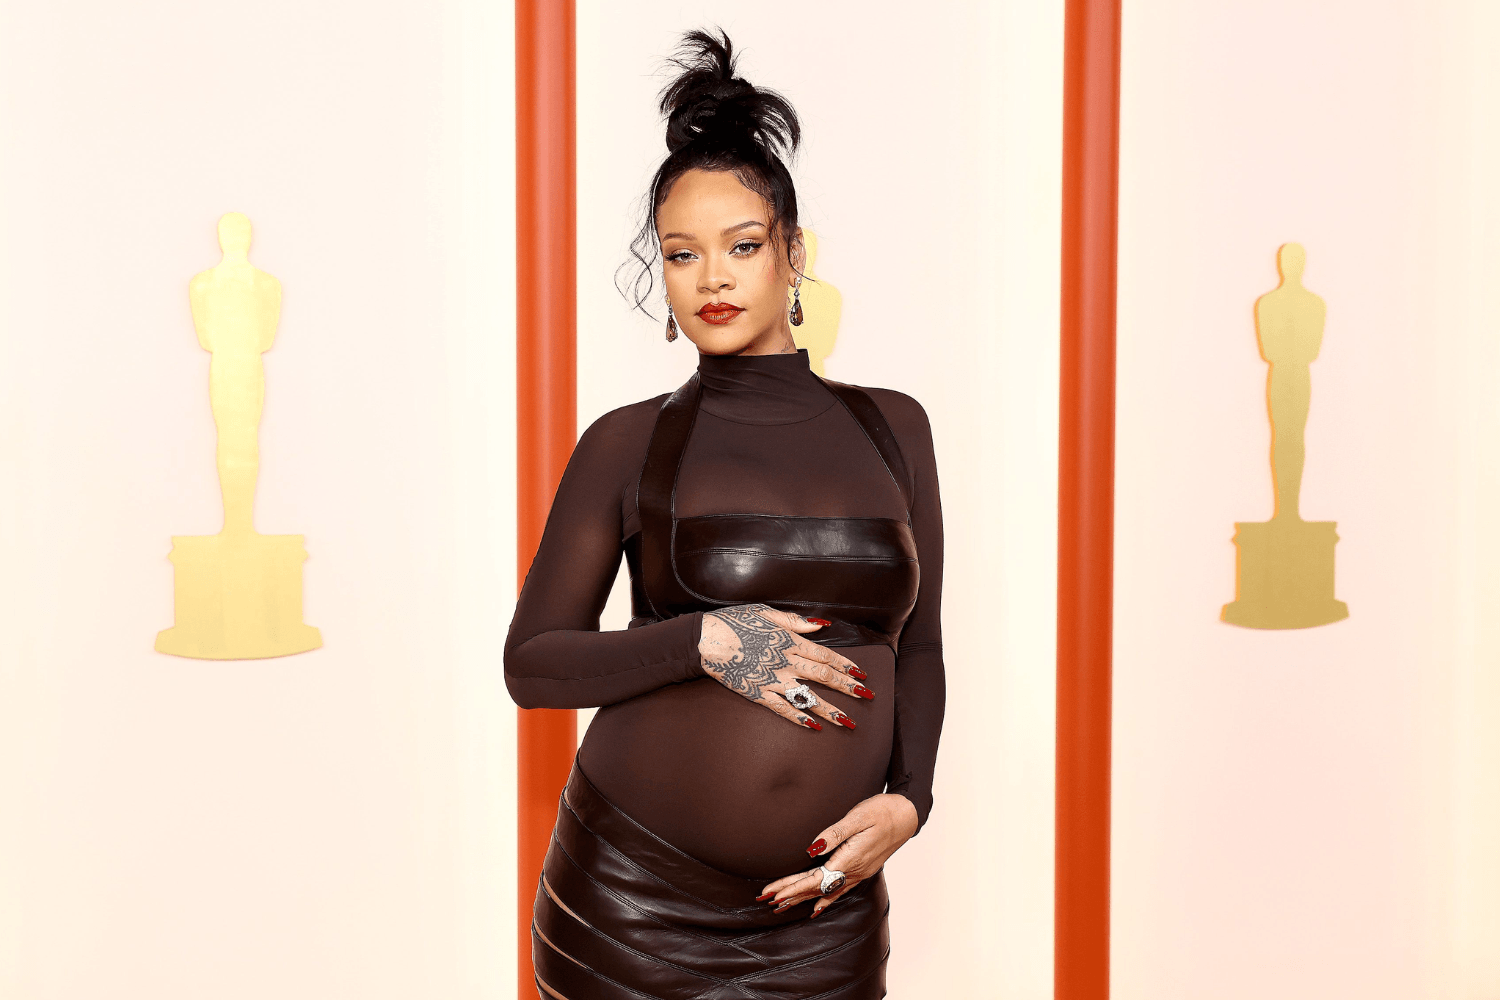 Remarkable looks and Rihanna's baby bump at the Oscars 2023 - recap